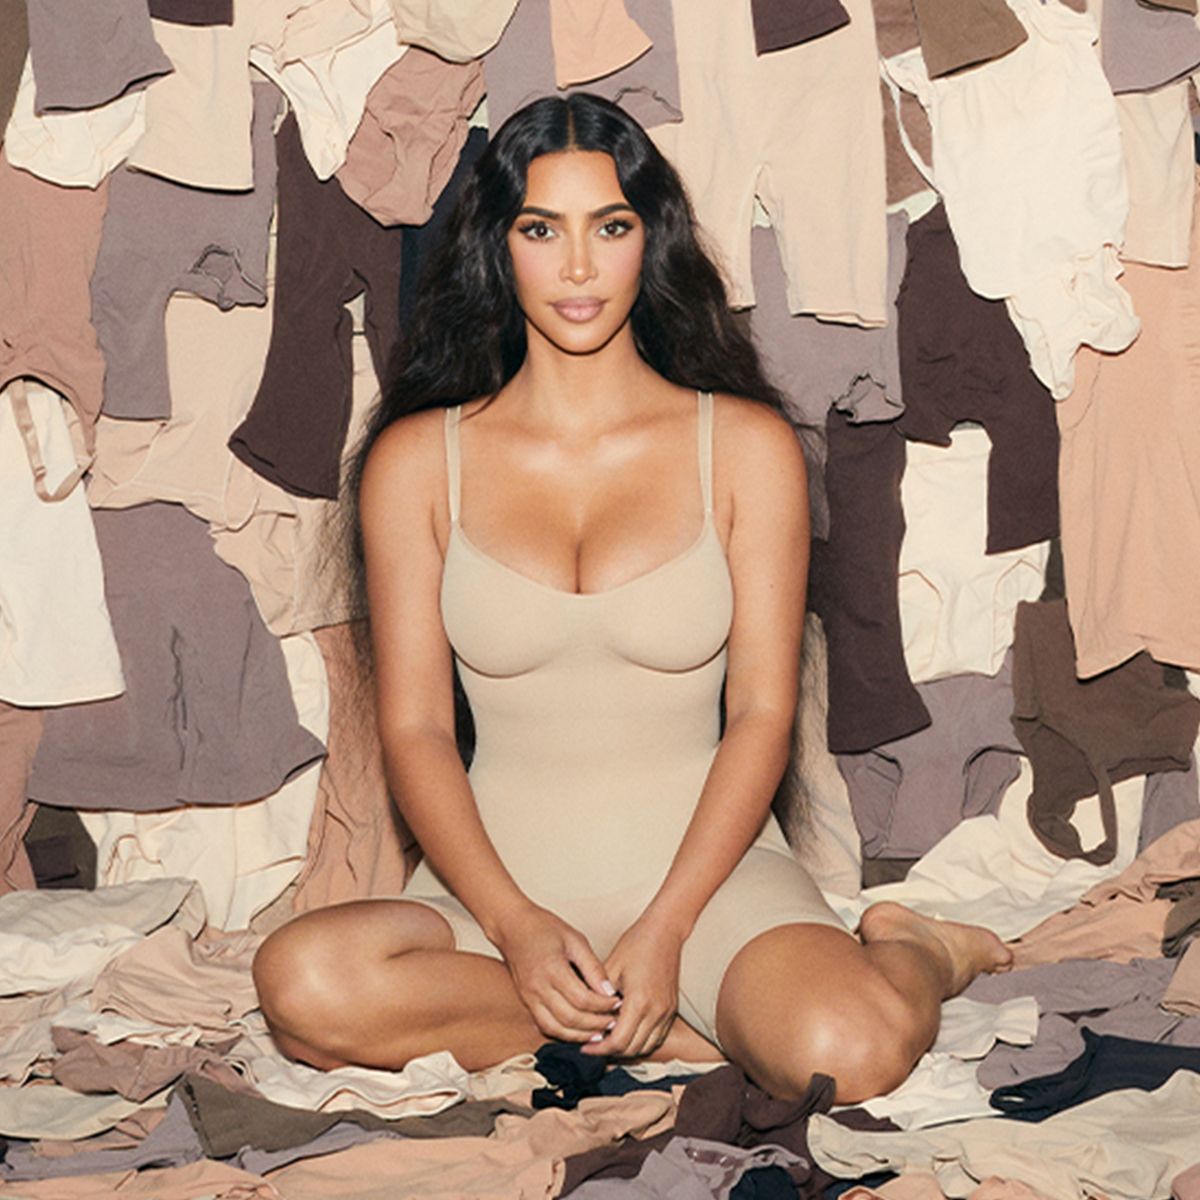 SKIMS - Kim Kardashian West wears the Scoop Bralette and Short